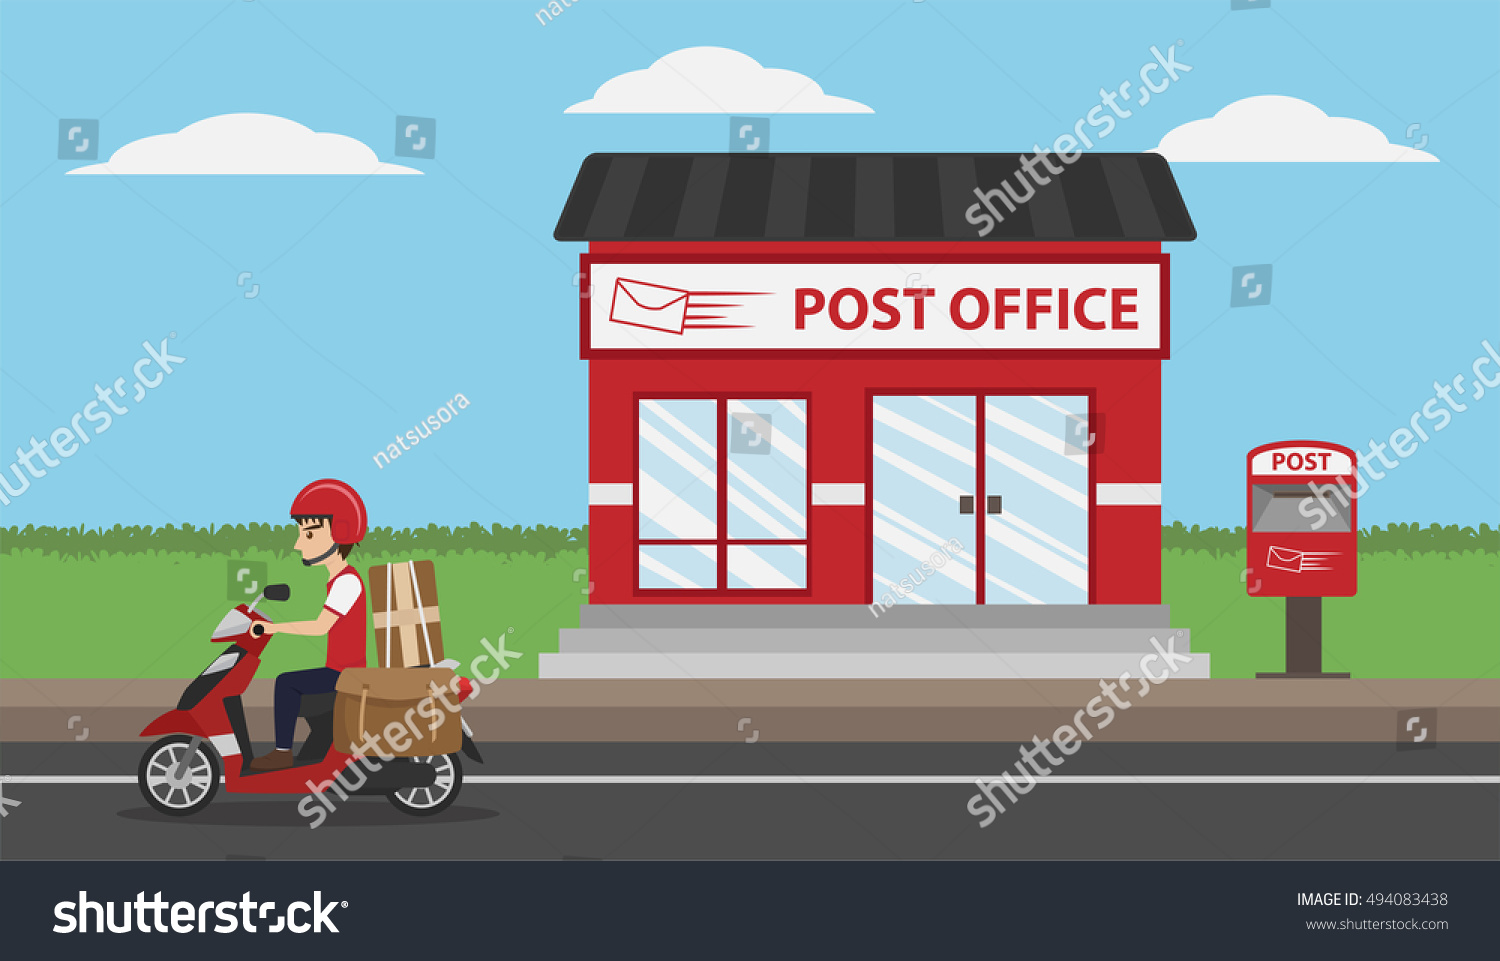 11314 Post Office Parcel Stock Vectors Images And Vector Art Shutterstock